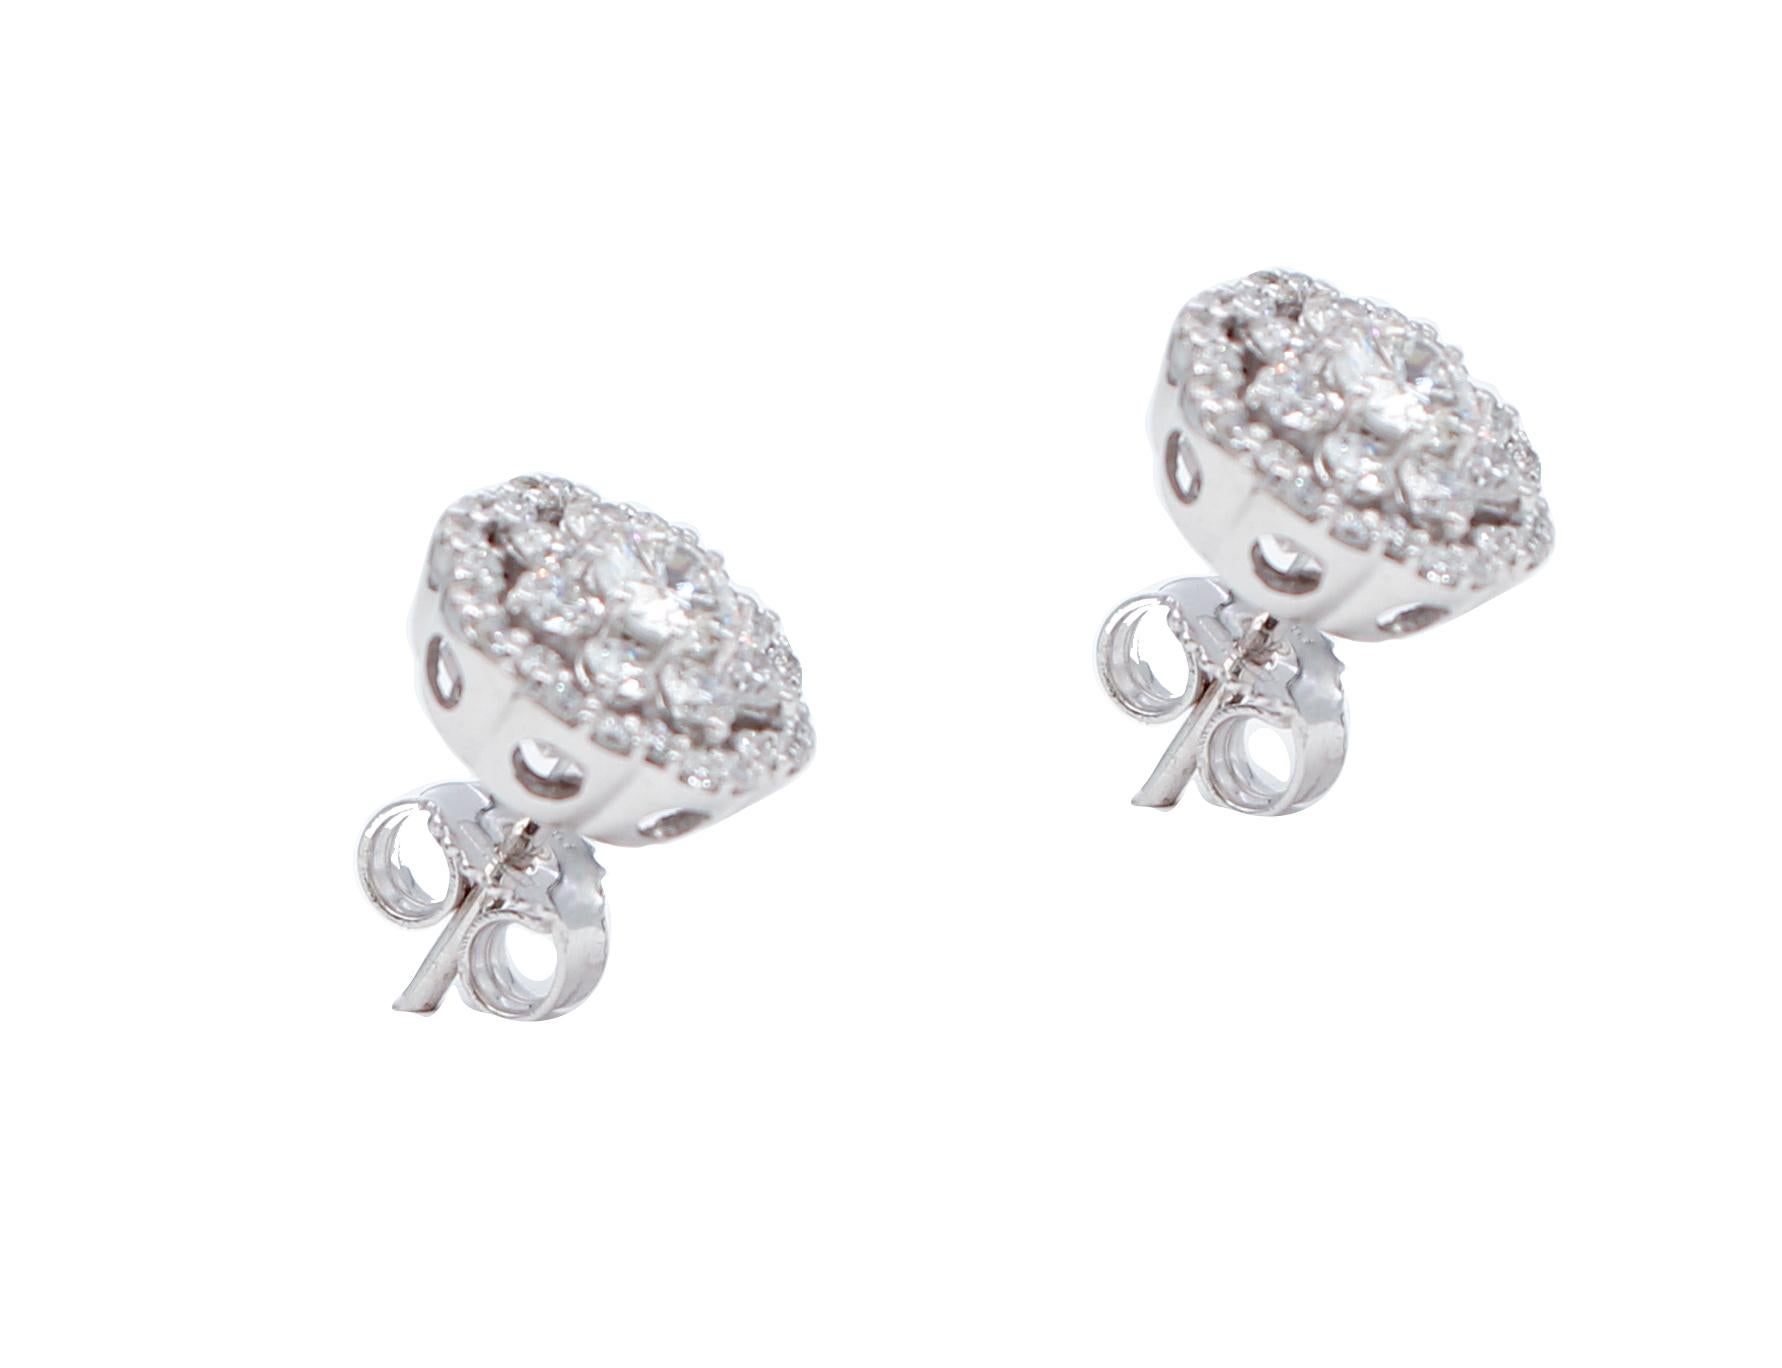 Mixed Cut 1.65 Carat White Diamonds, 18 Karat White Gold Flower Stud Earrings For Sale